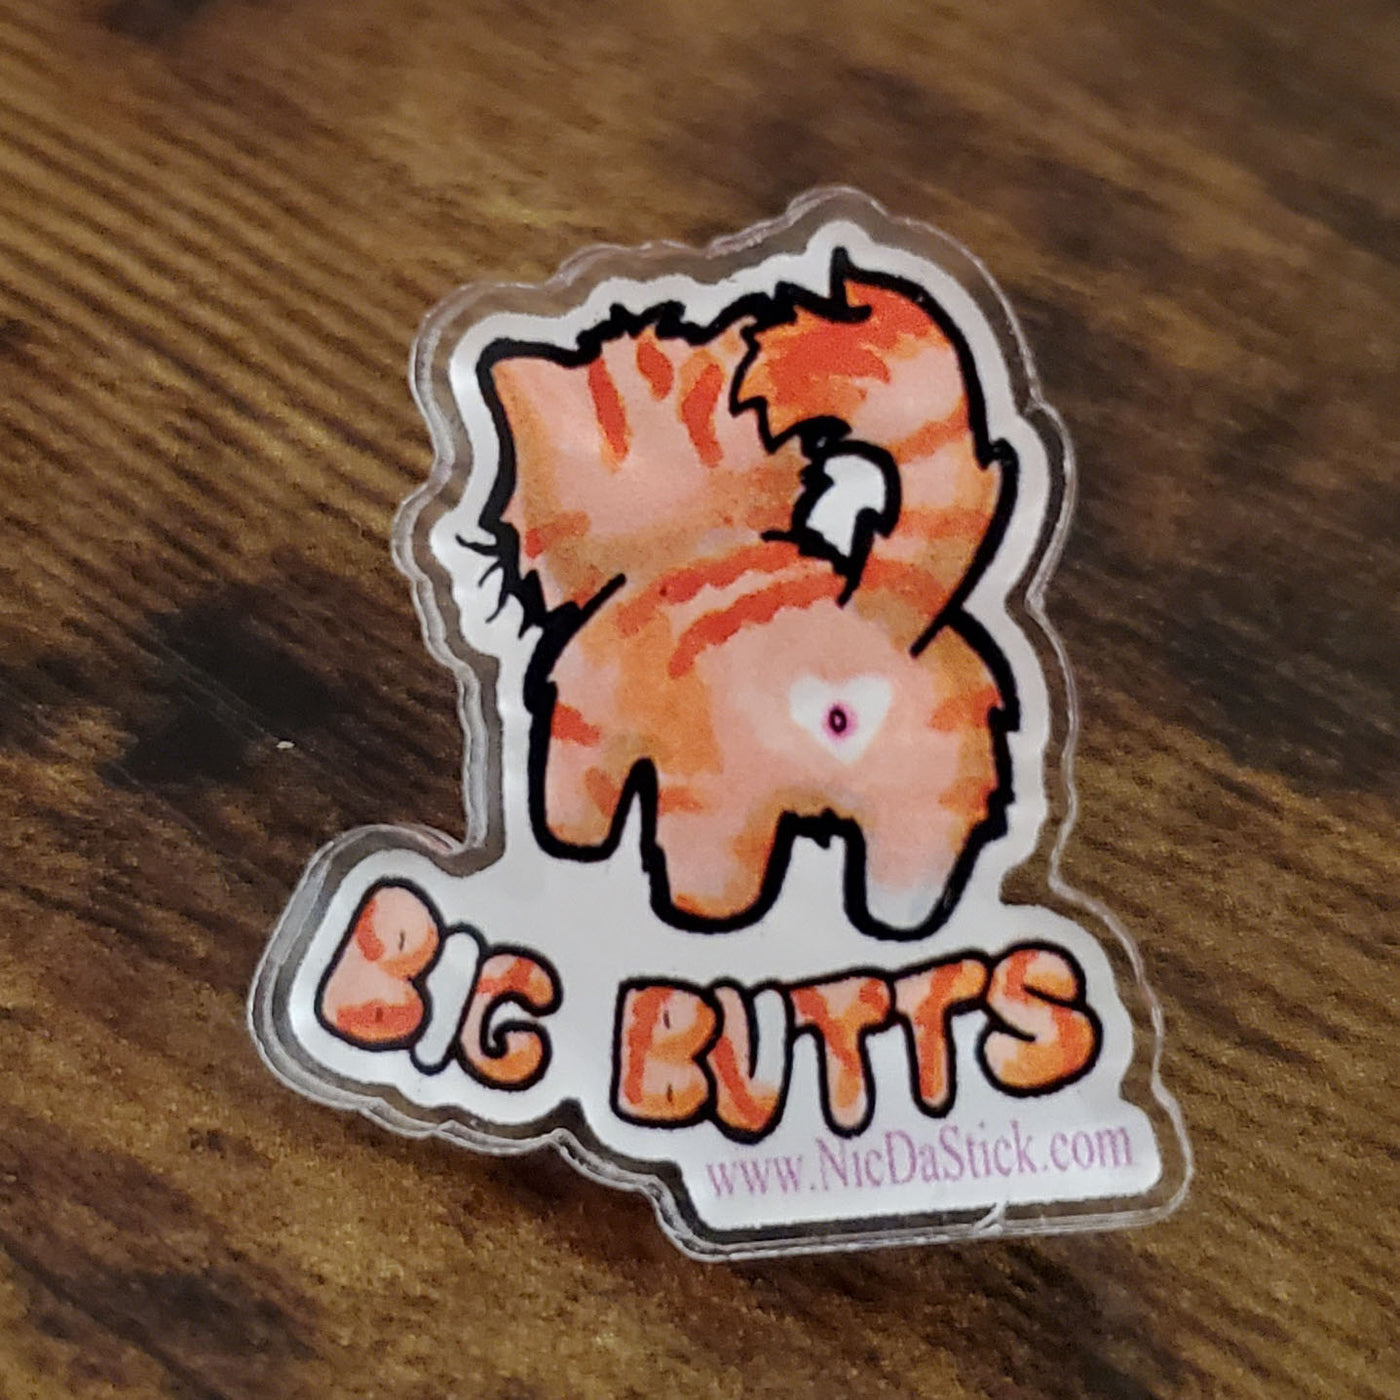 I love Big Butts - Multi Kitty Butt Pin Set